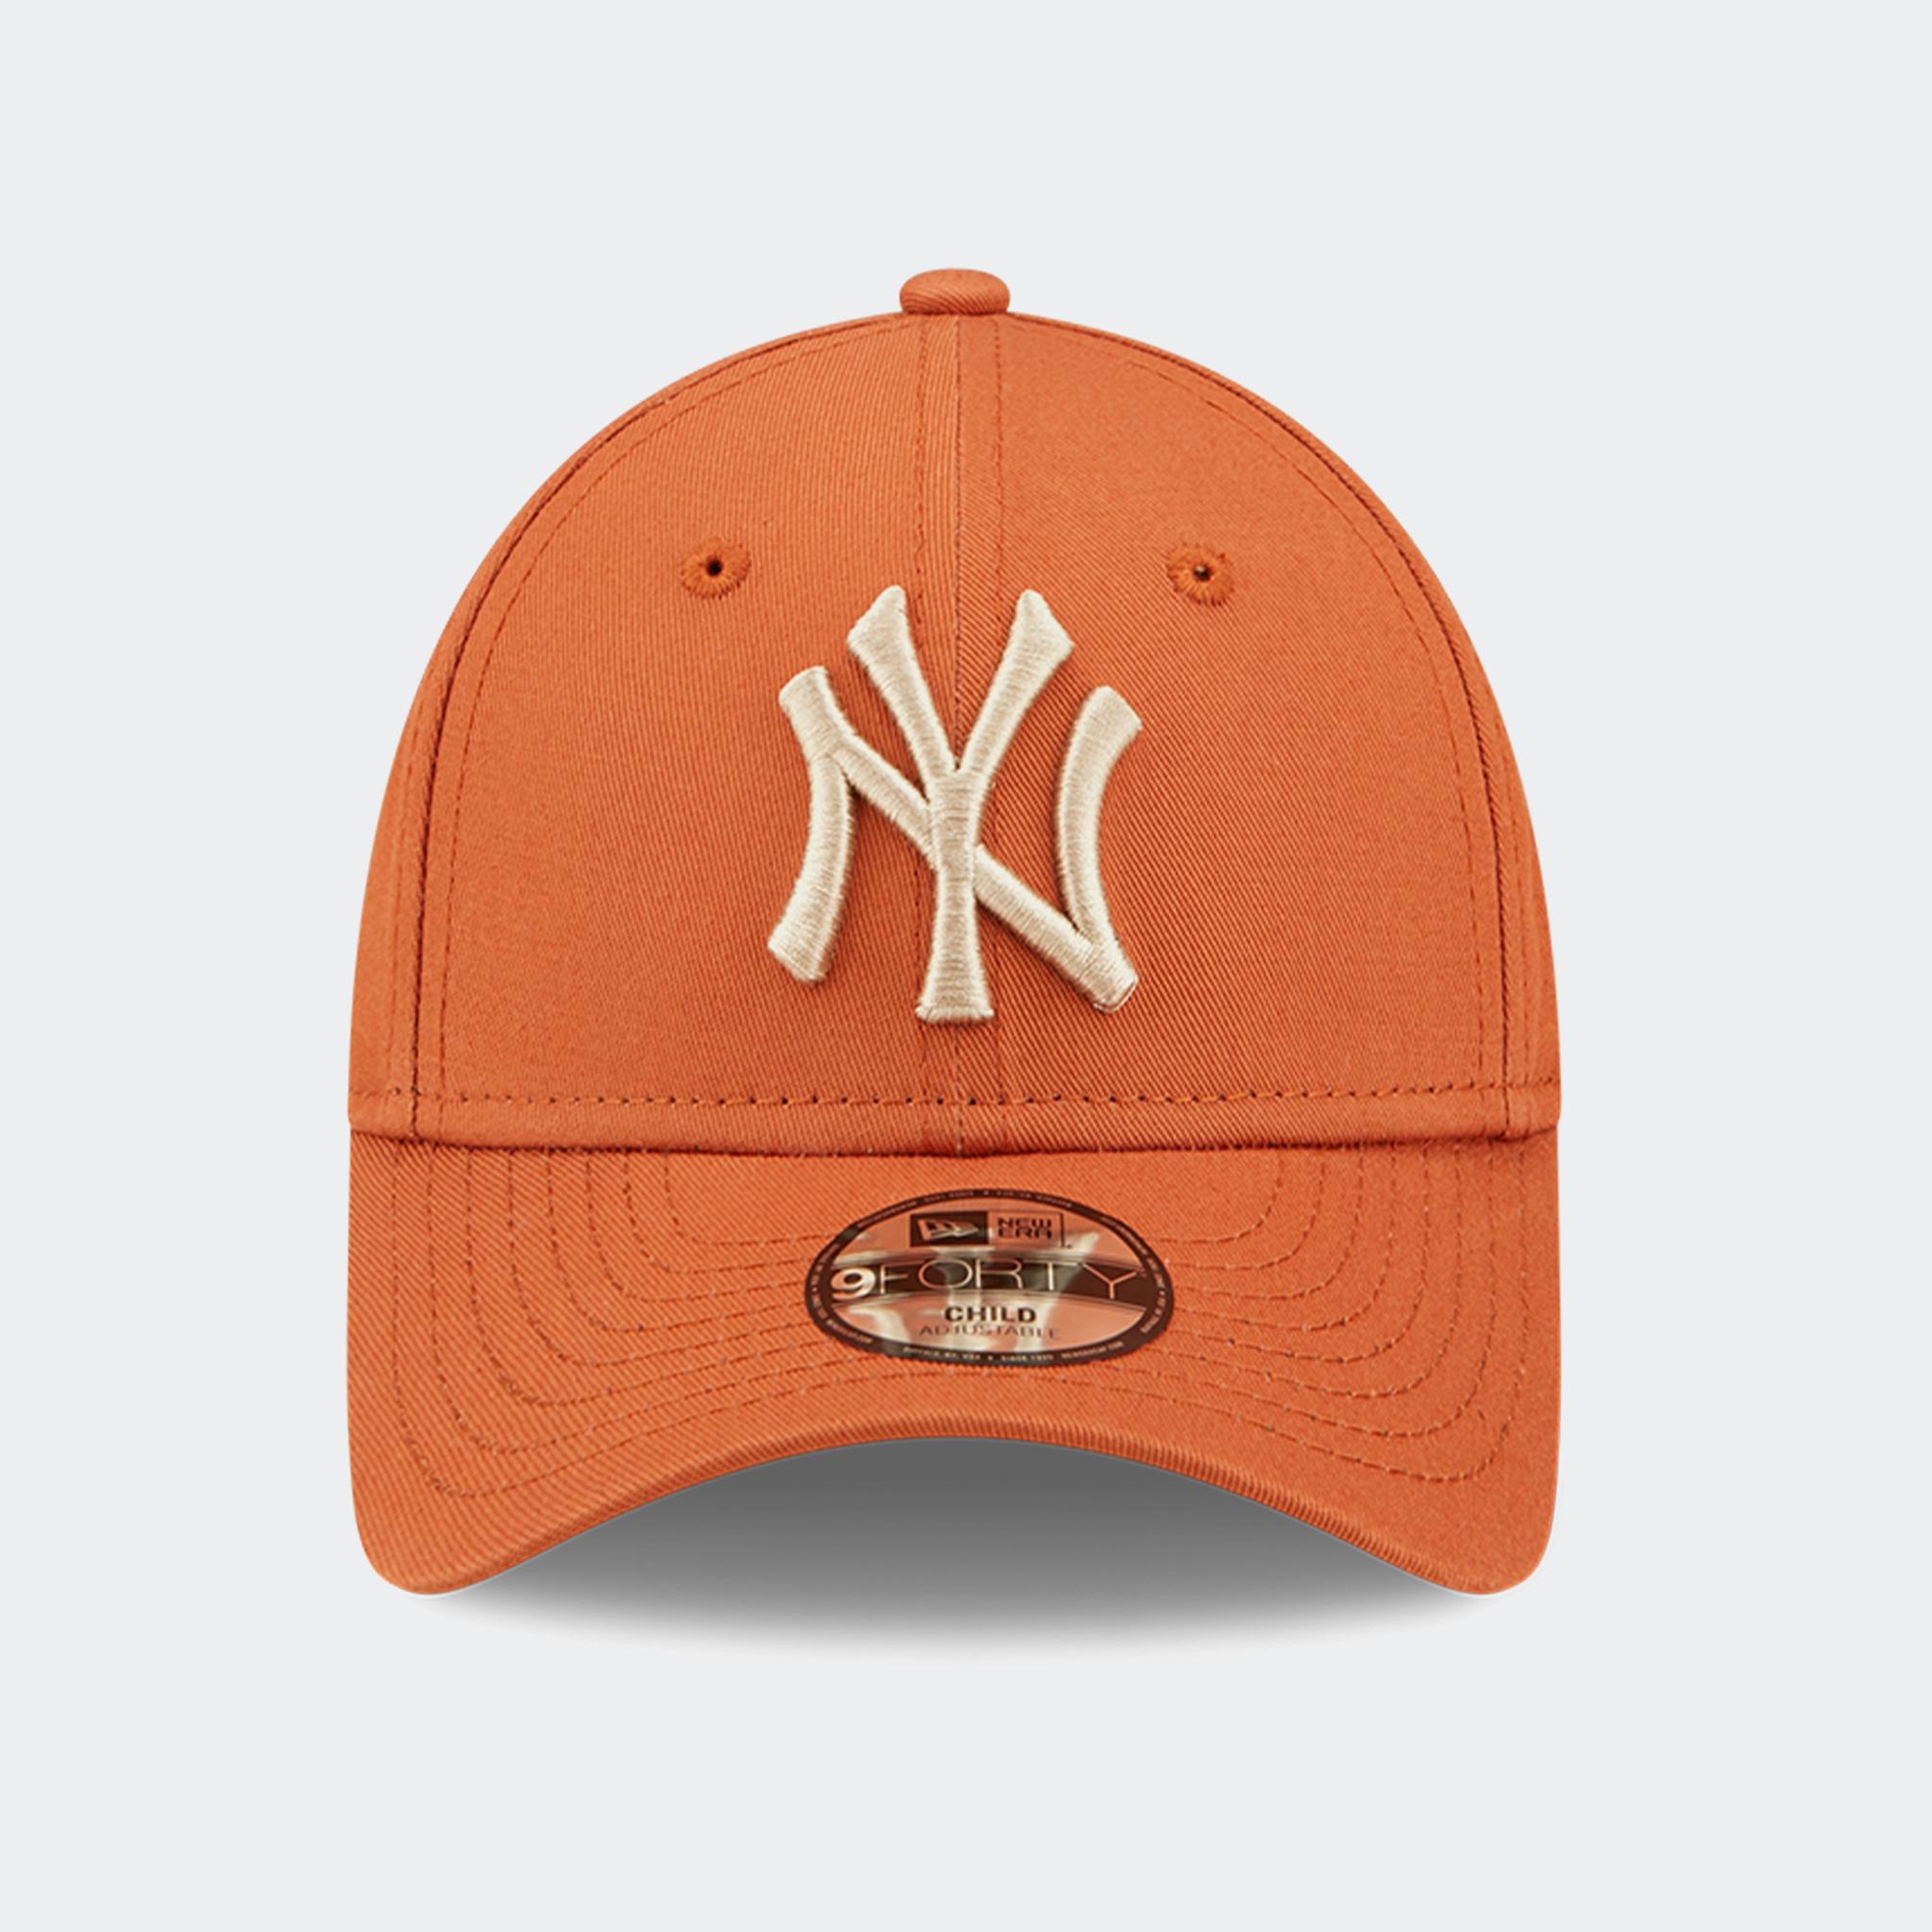  New Era New York Yankees Rdwstn Çocuk Turuncu Şapka